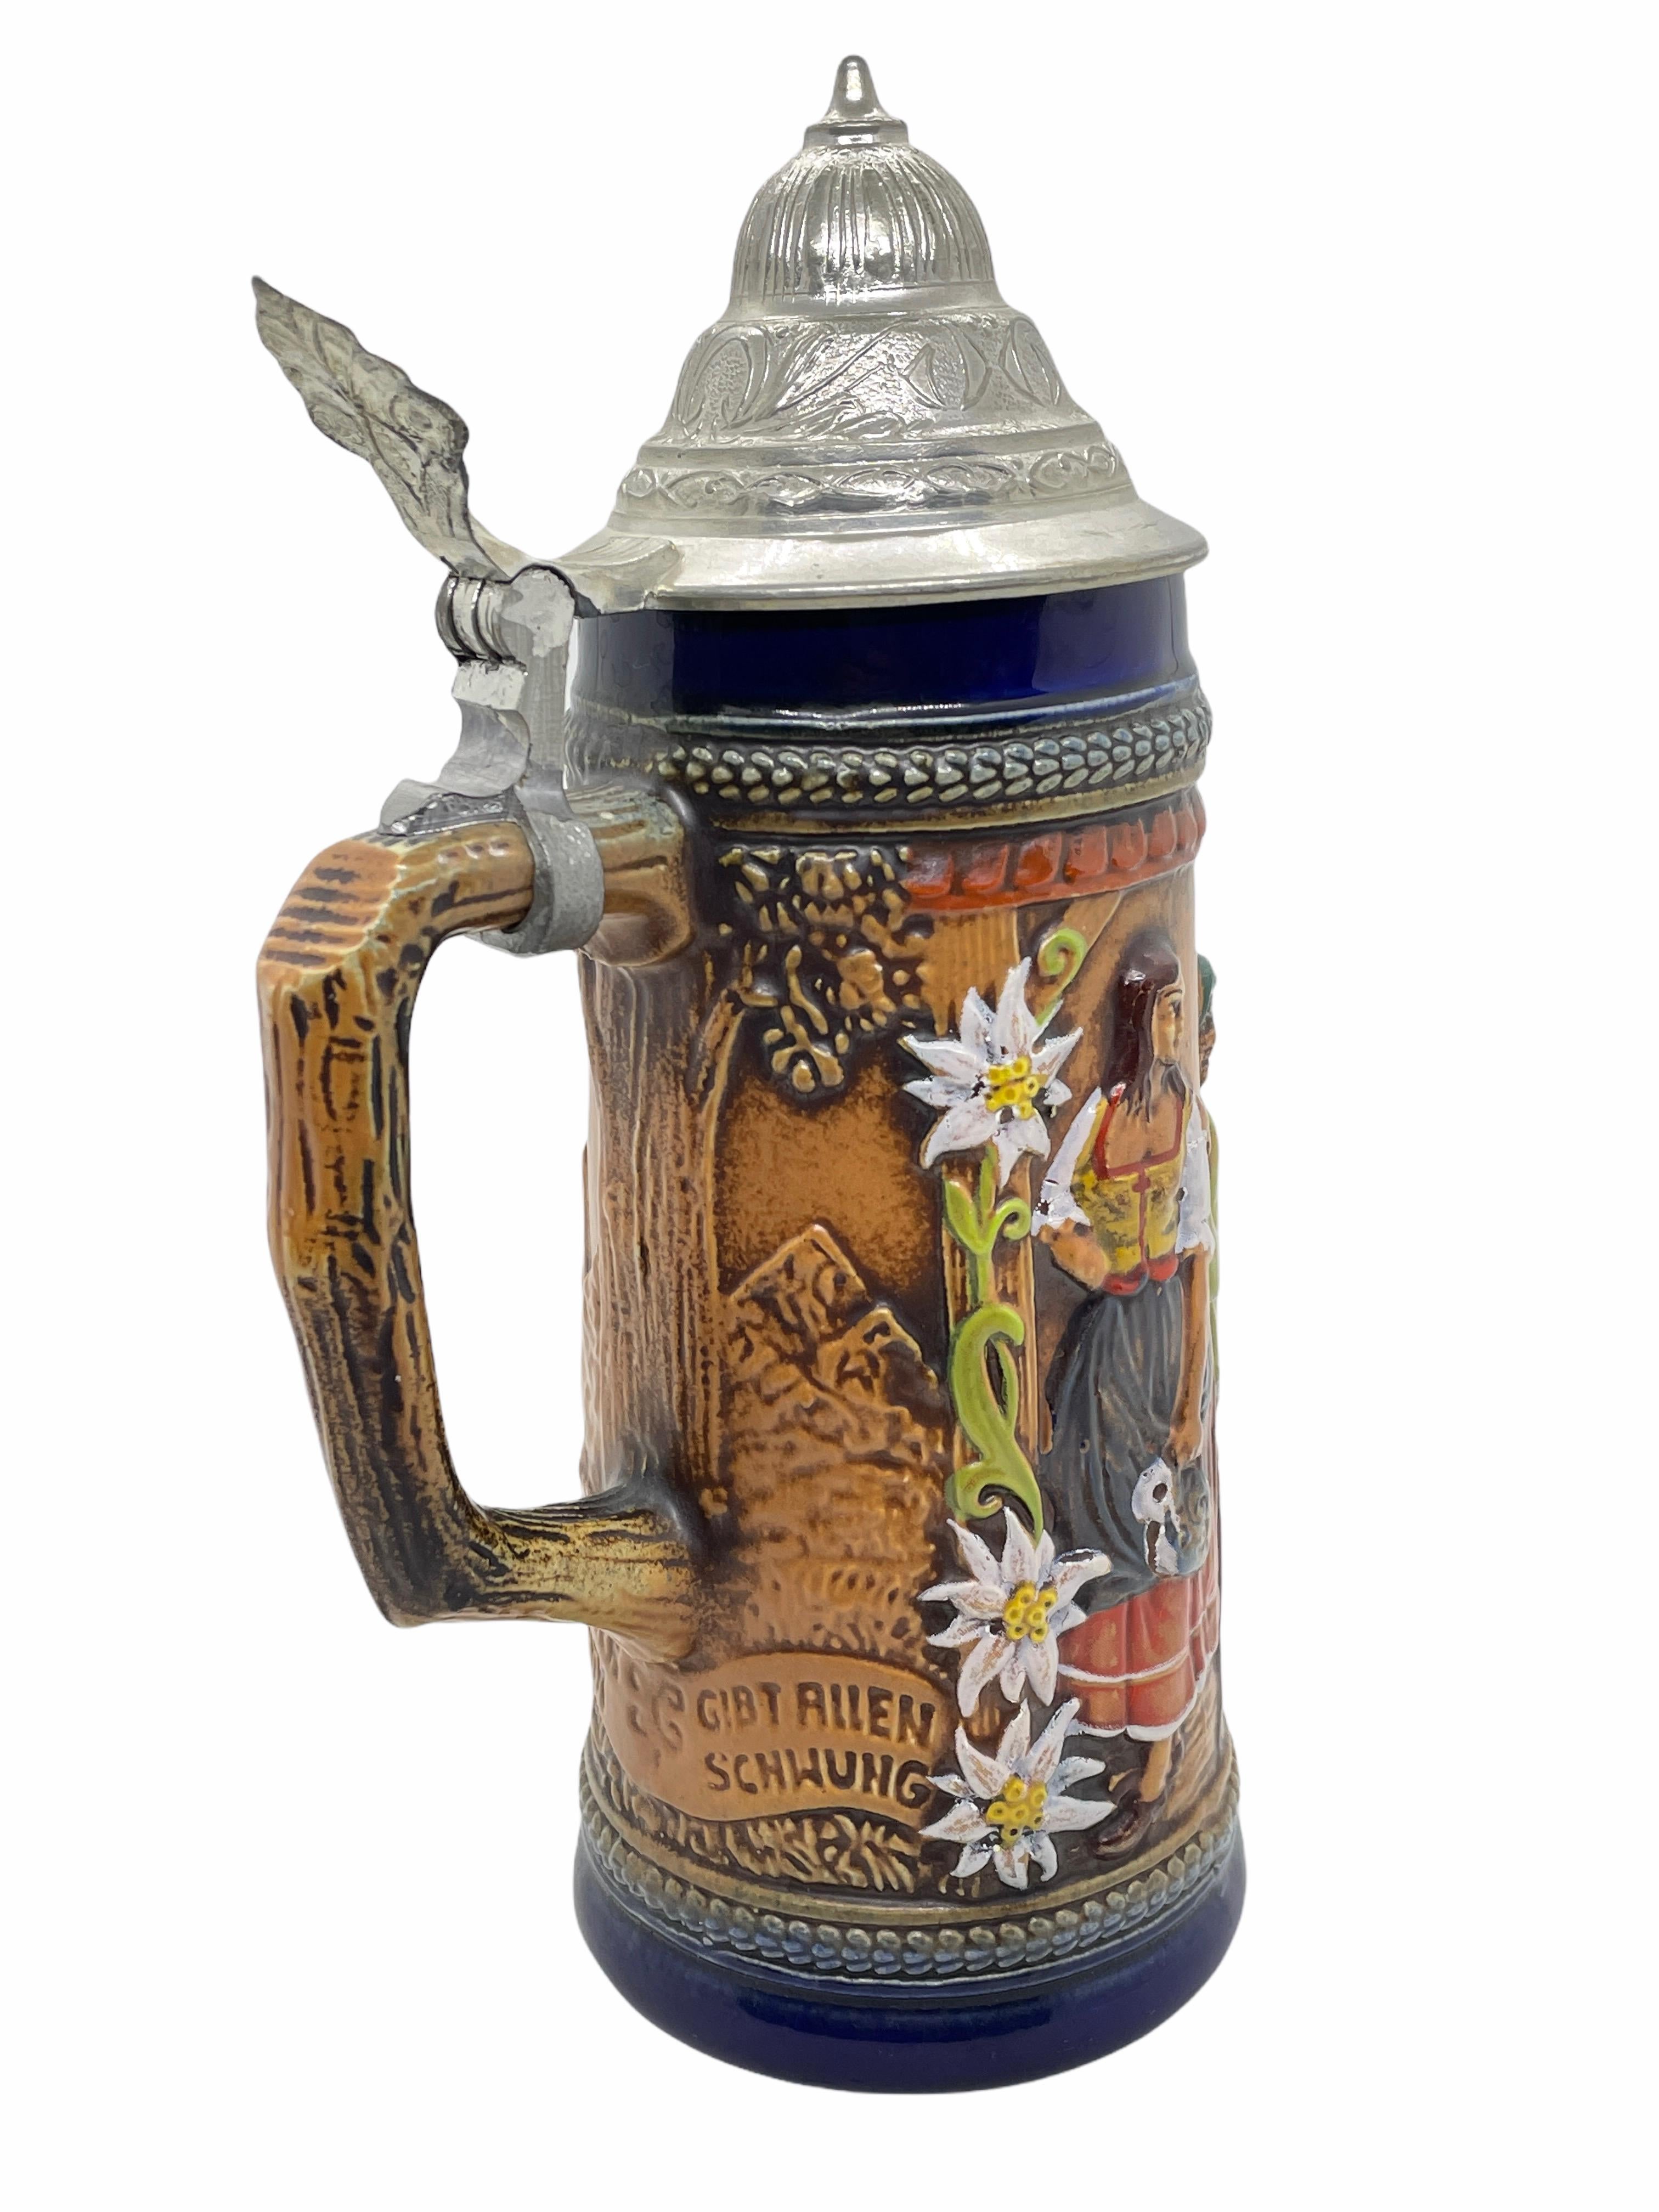 Folk Art Vintage Ceramic Beer Stein Lidded with Pewter Lid by Gerz, 1960s